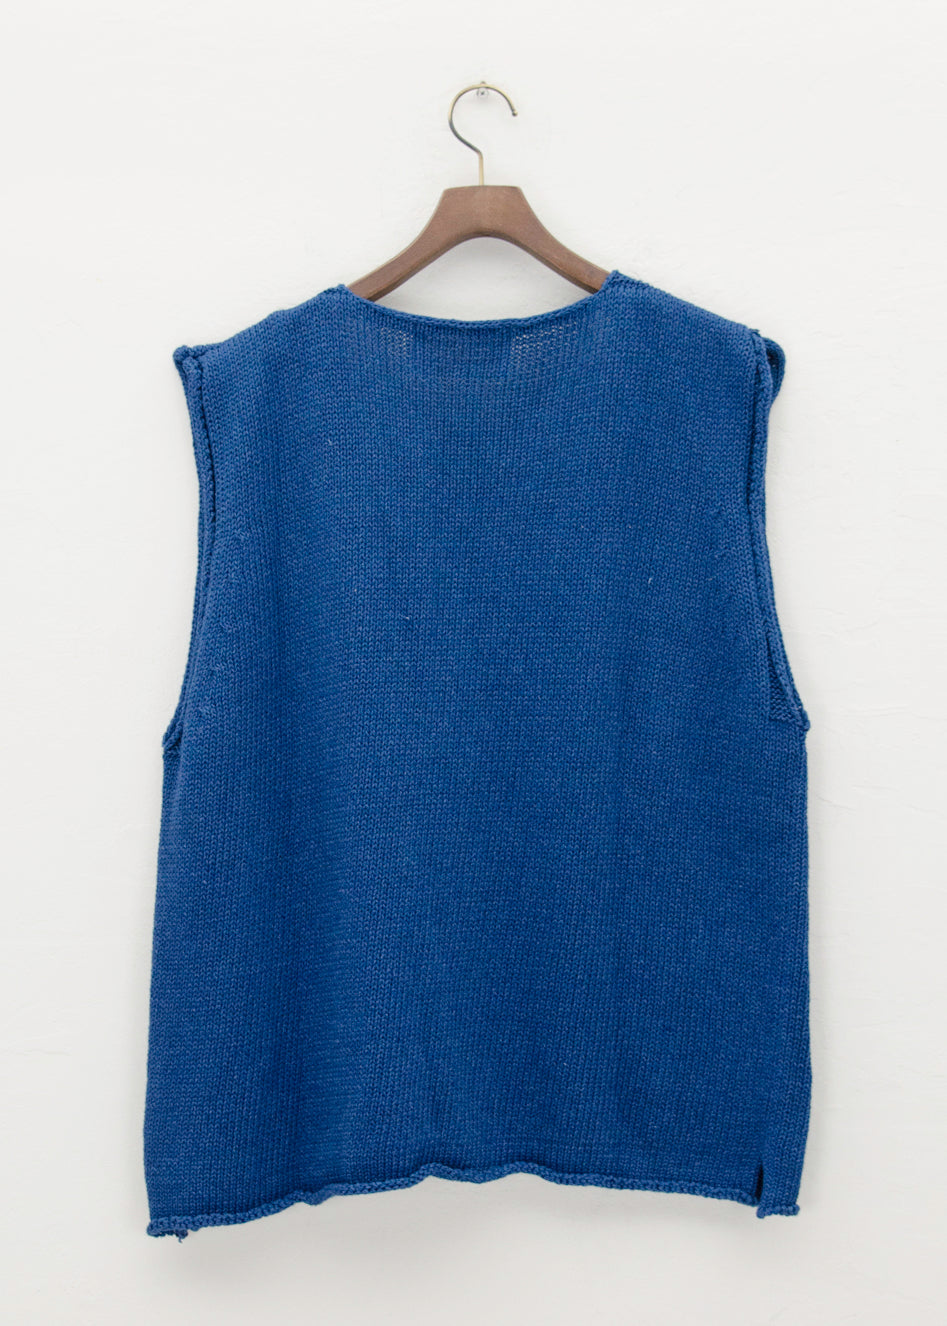 XENIA TELUNTS "Indigo Blue Drop Neck Pocket Vest"